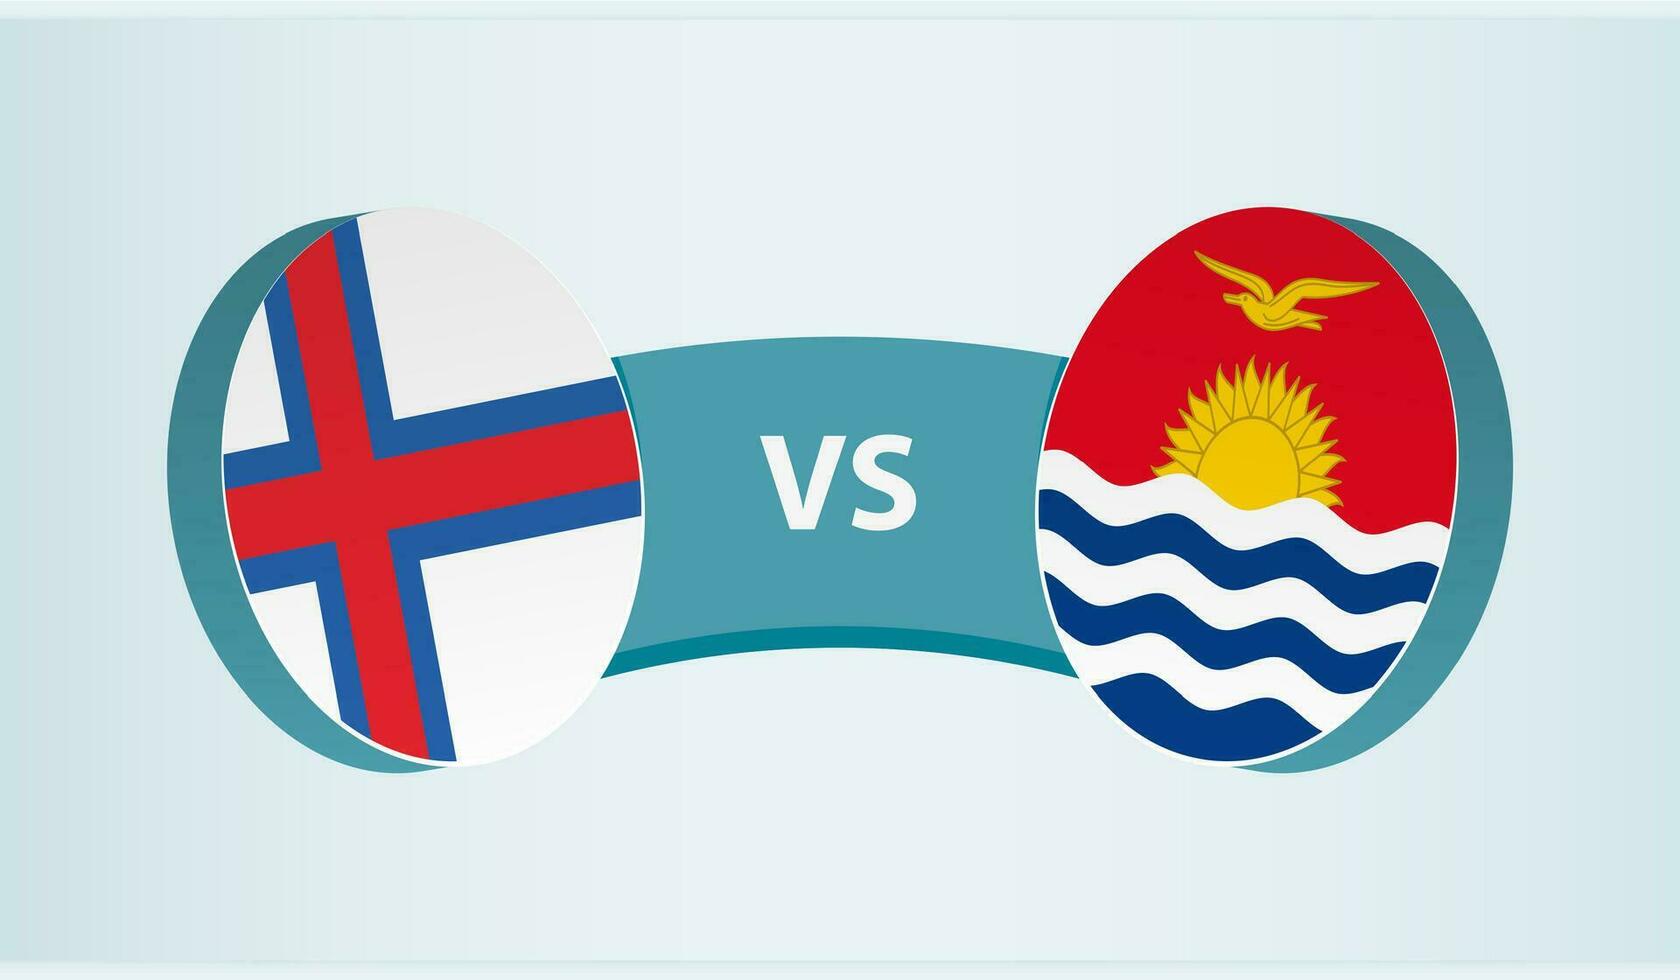 Faroe Islands versus Kiribati, team sports competition concept. vector